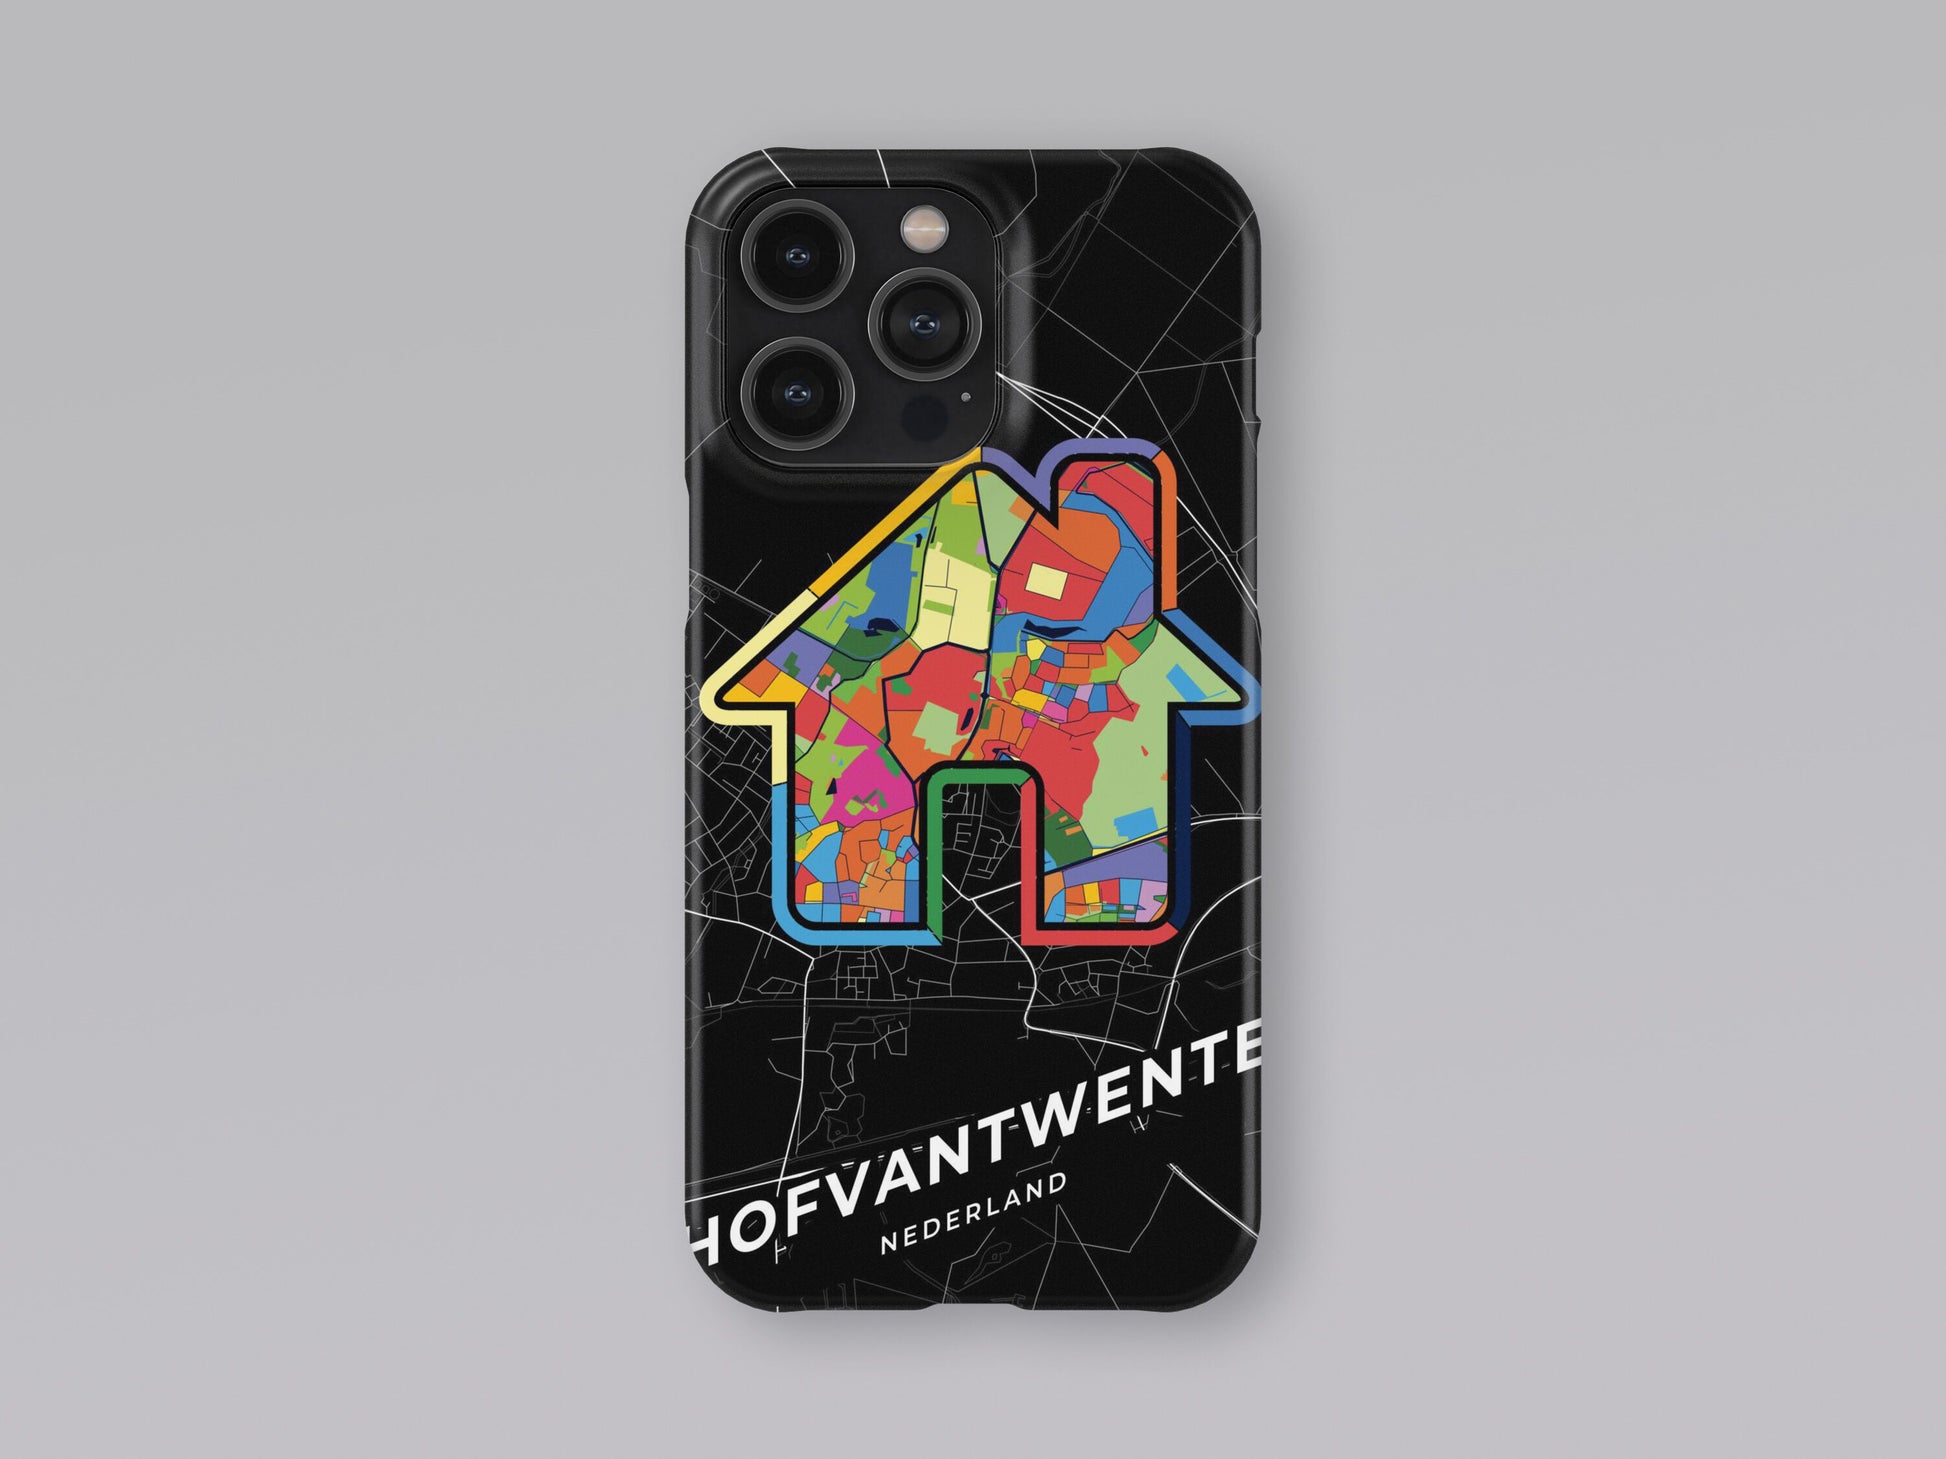 Hof Van Twente Netherlands slim phone case with colorful icon. Birthday, wedding or housewarming gift. Couple match cases. 3